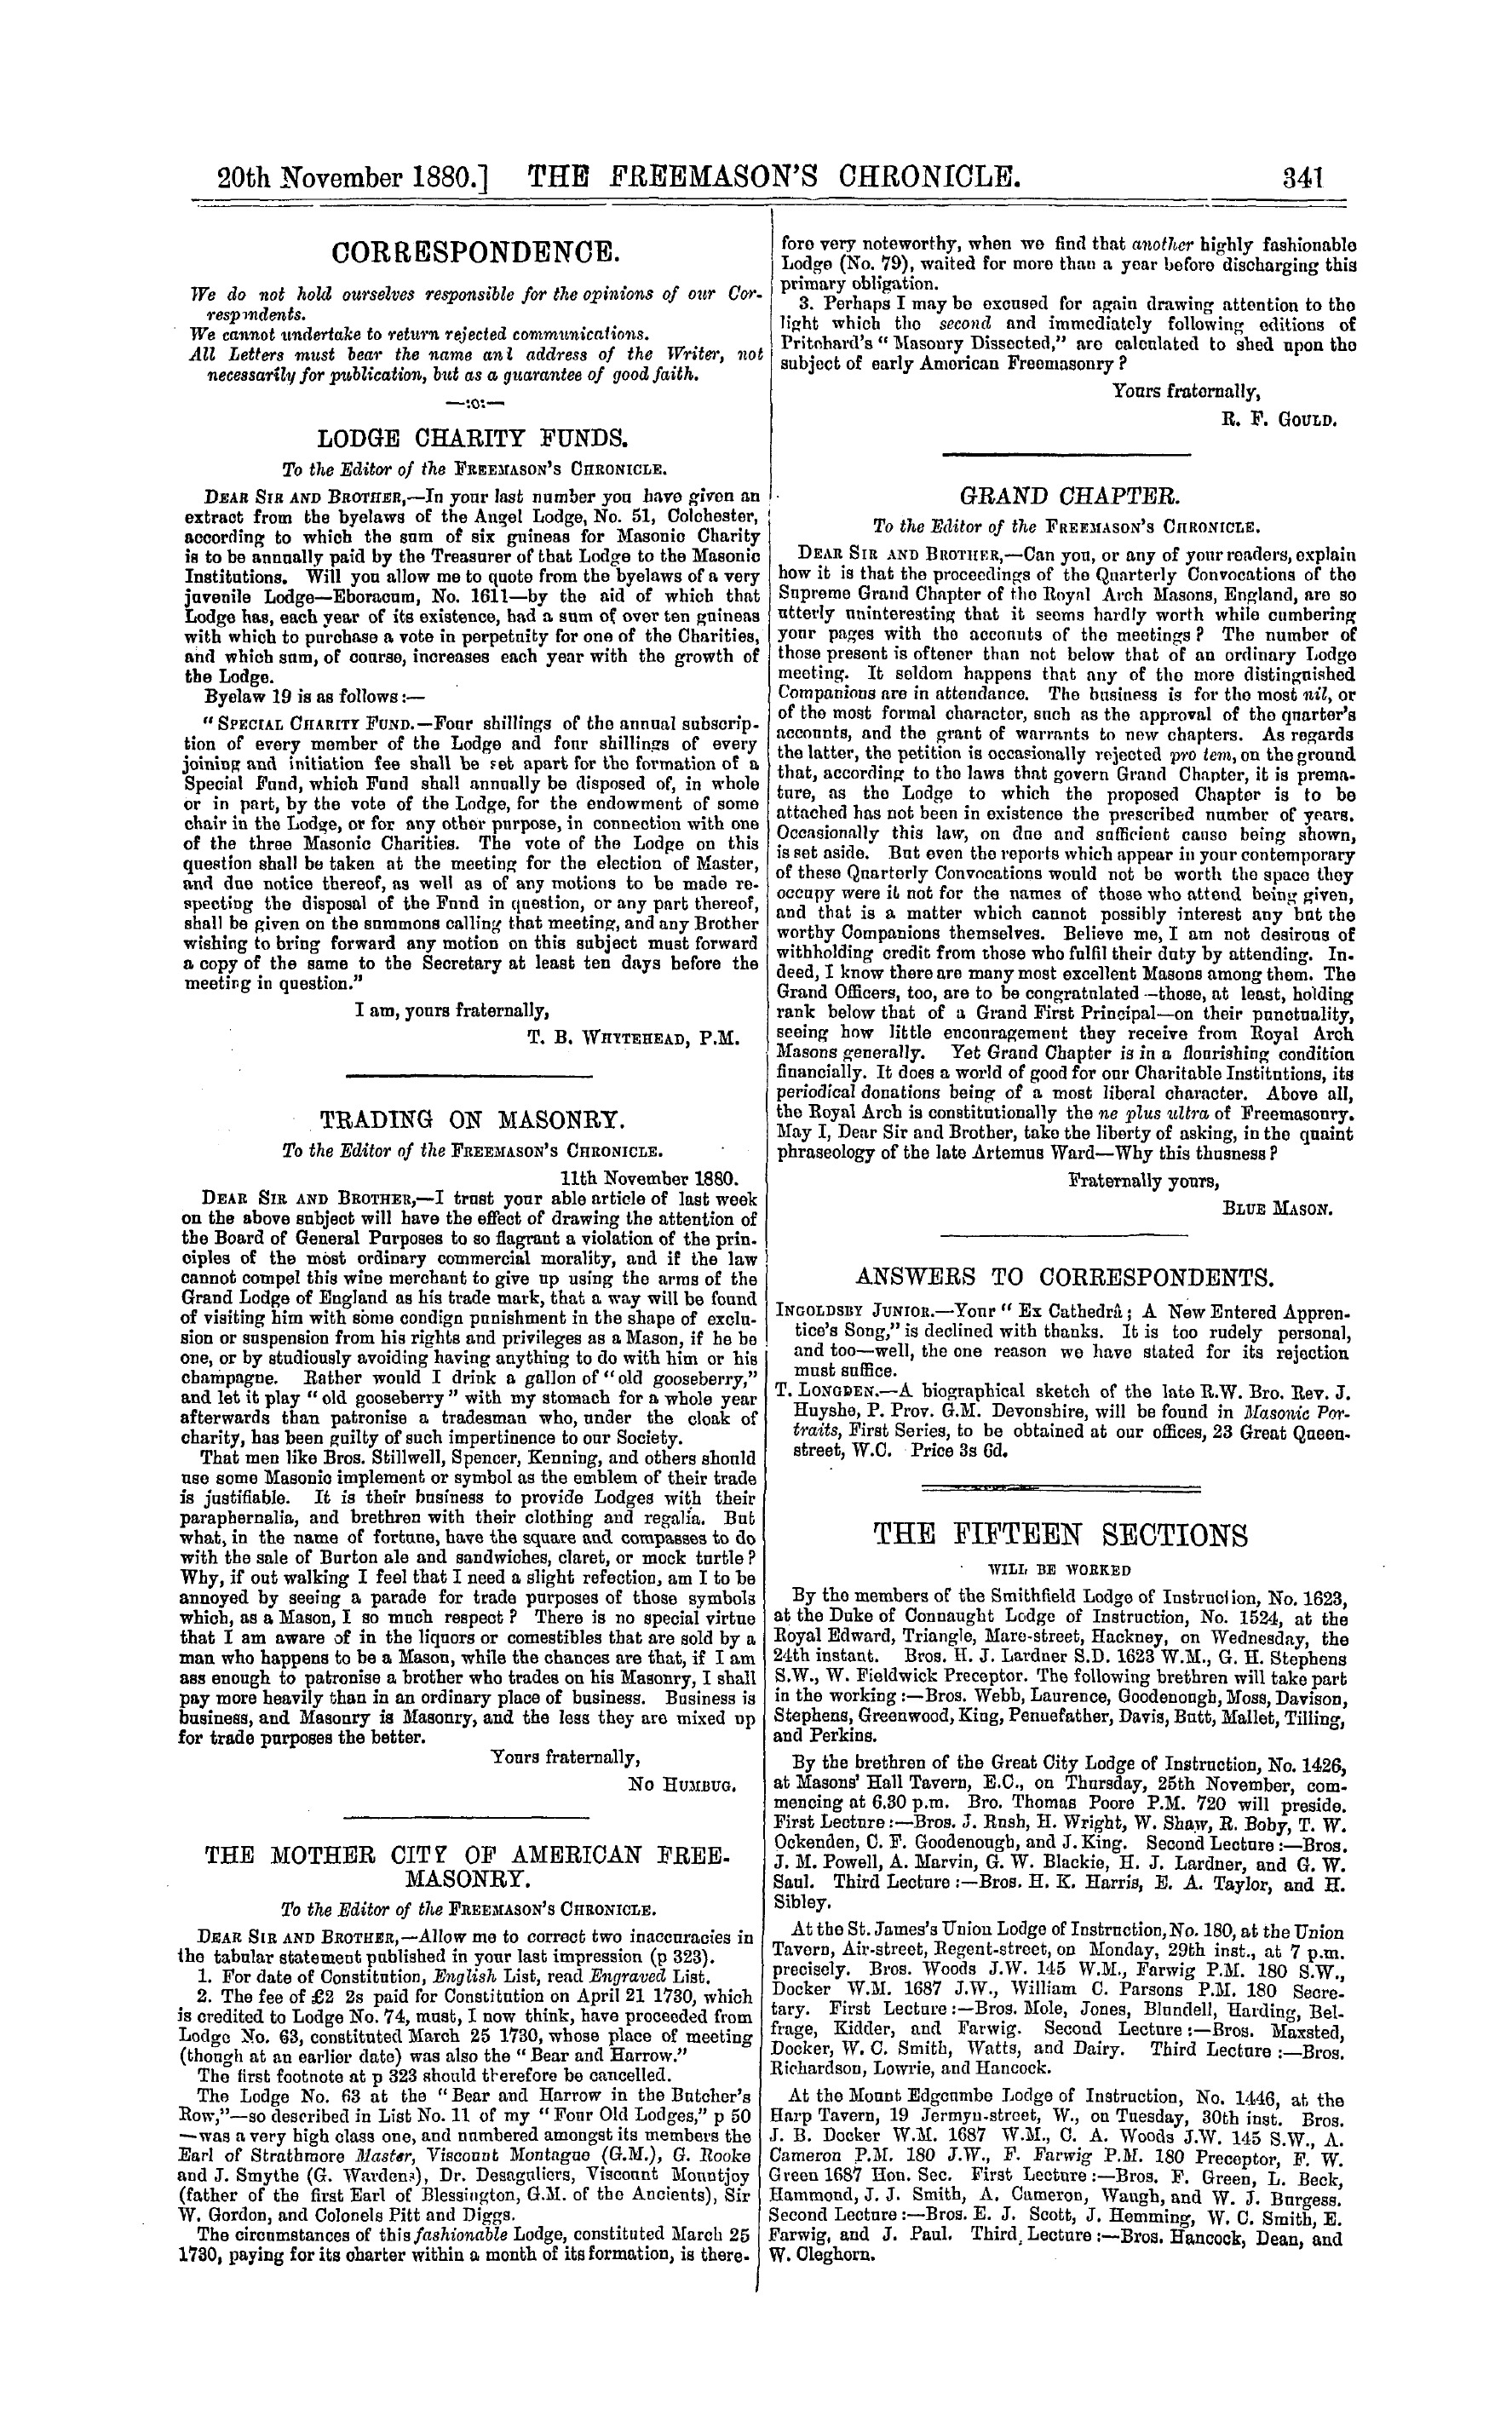 The Freemason's Chronicle: 1880-11-20 - Correspondence.